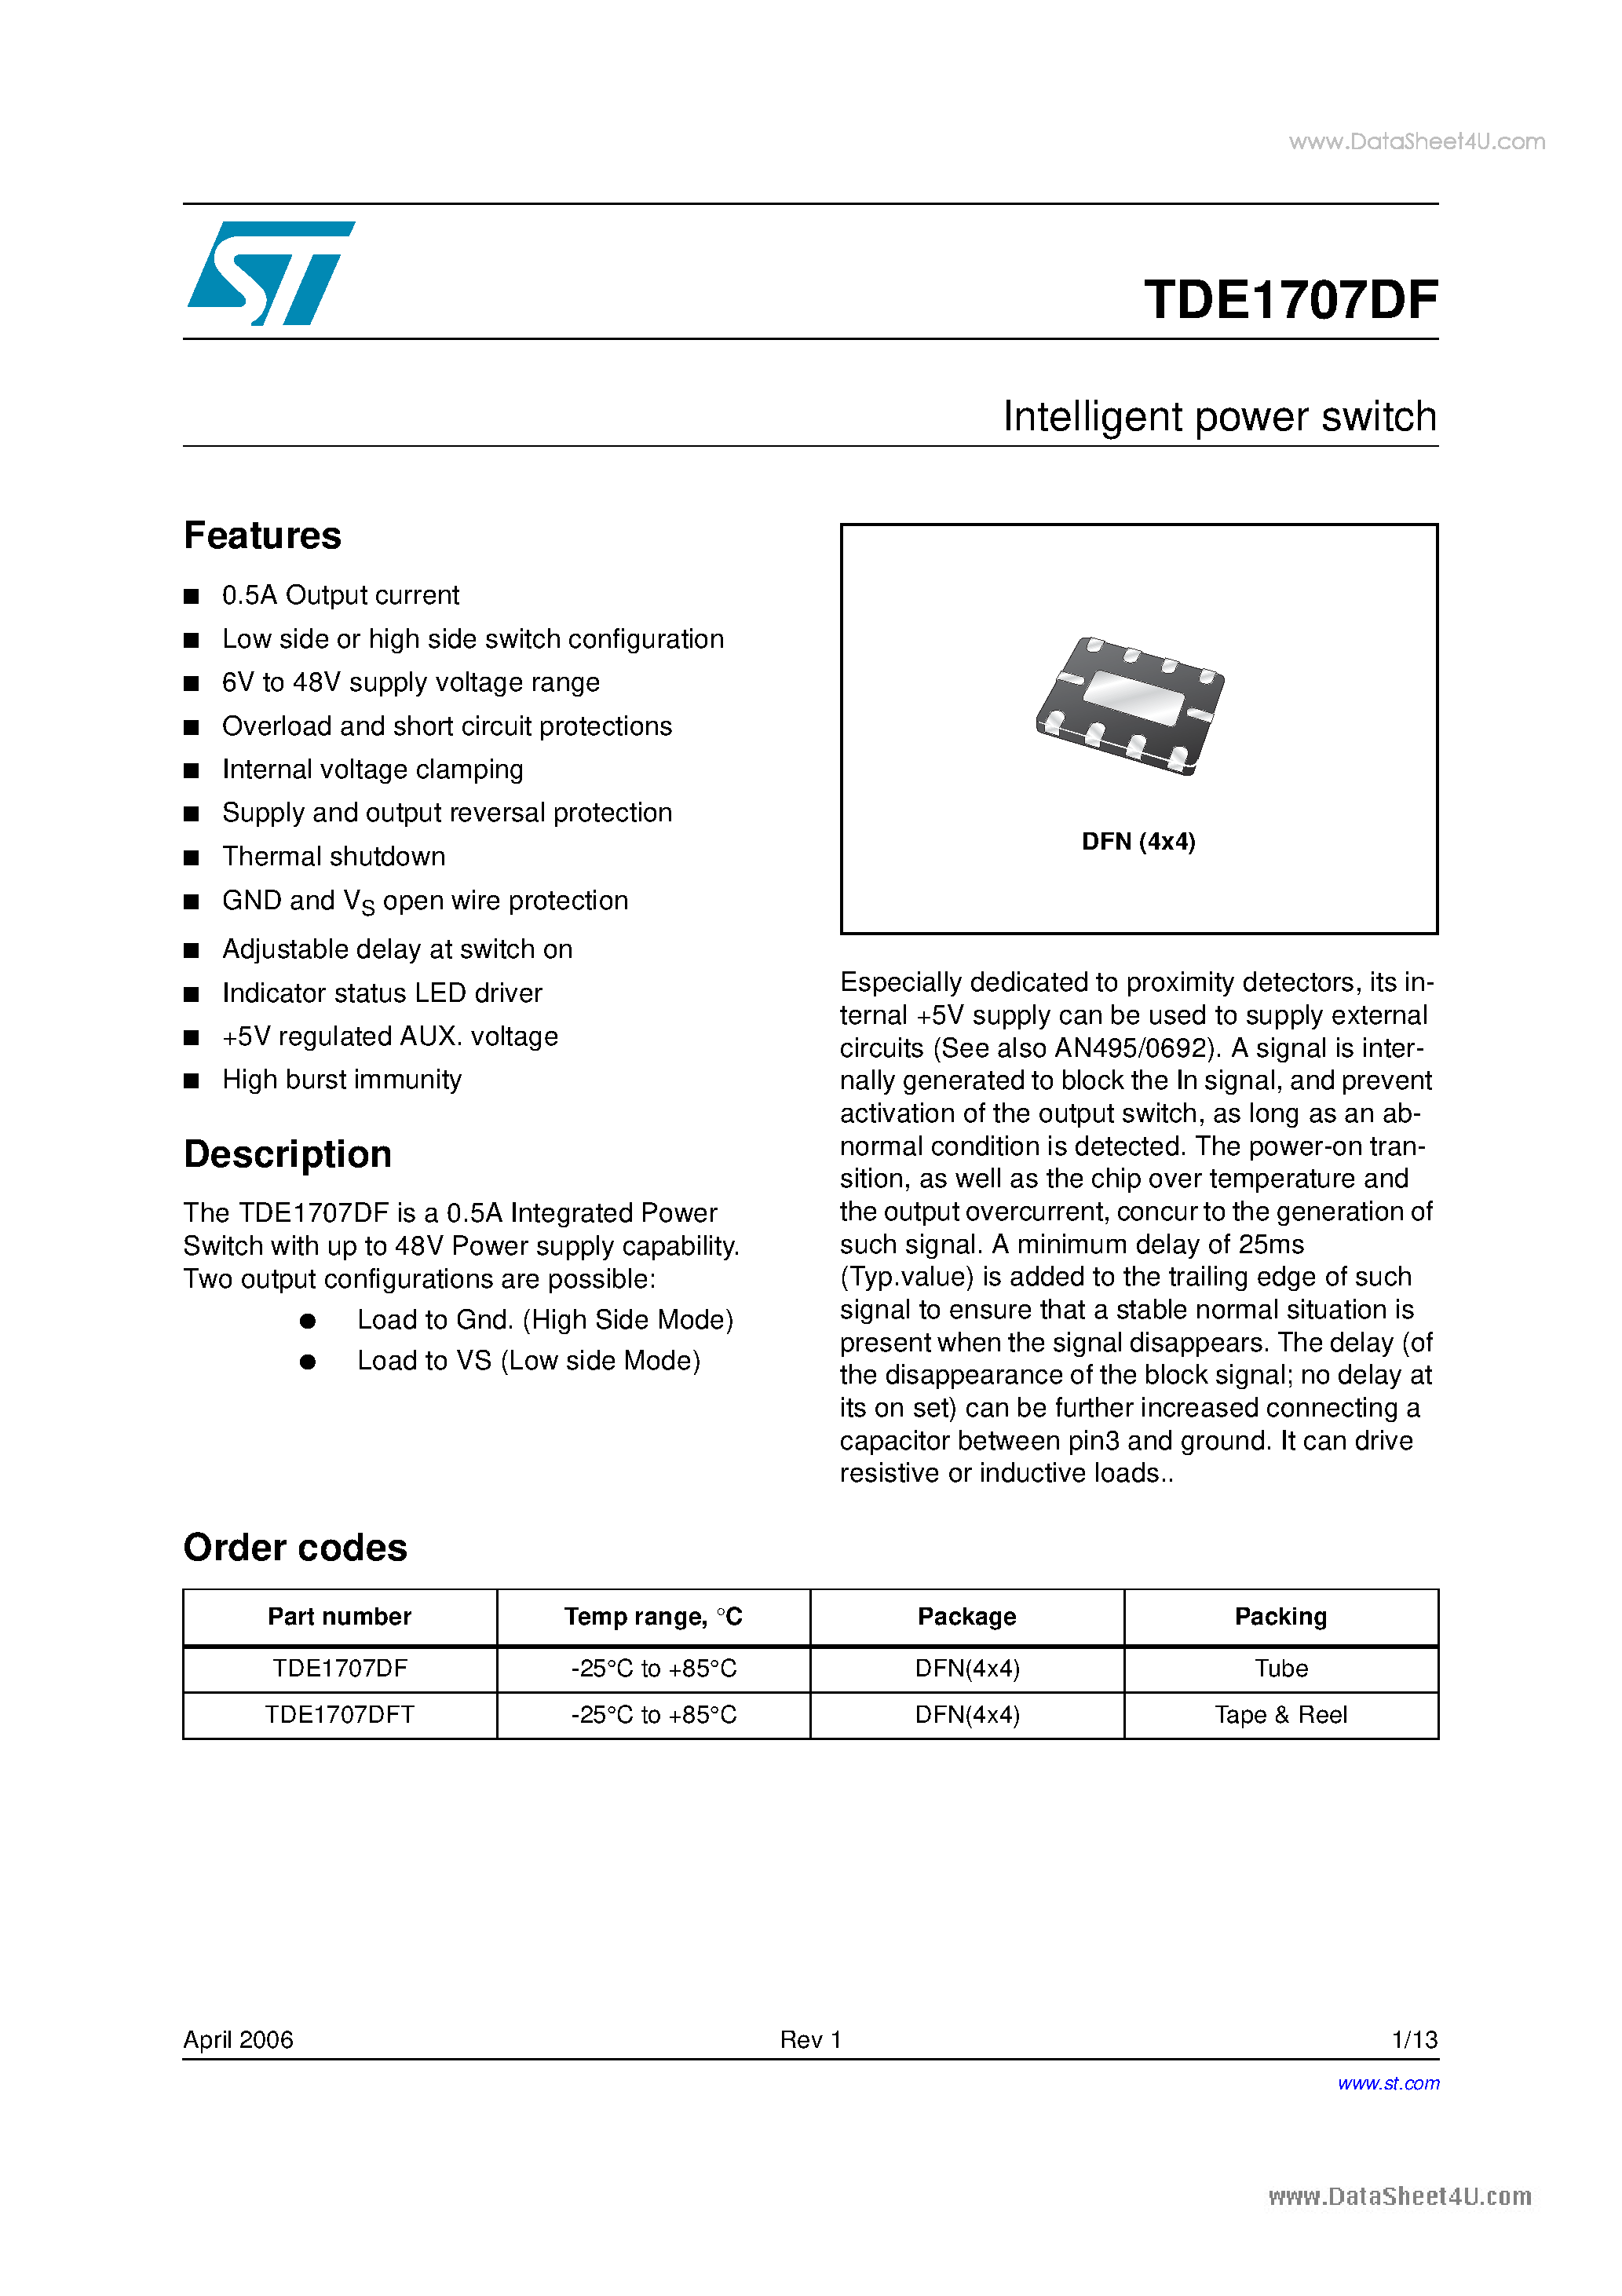 Даташит TDE1707DF - lntelligent power switch страница 1